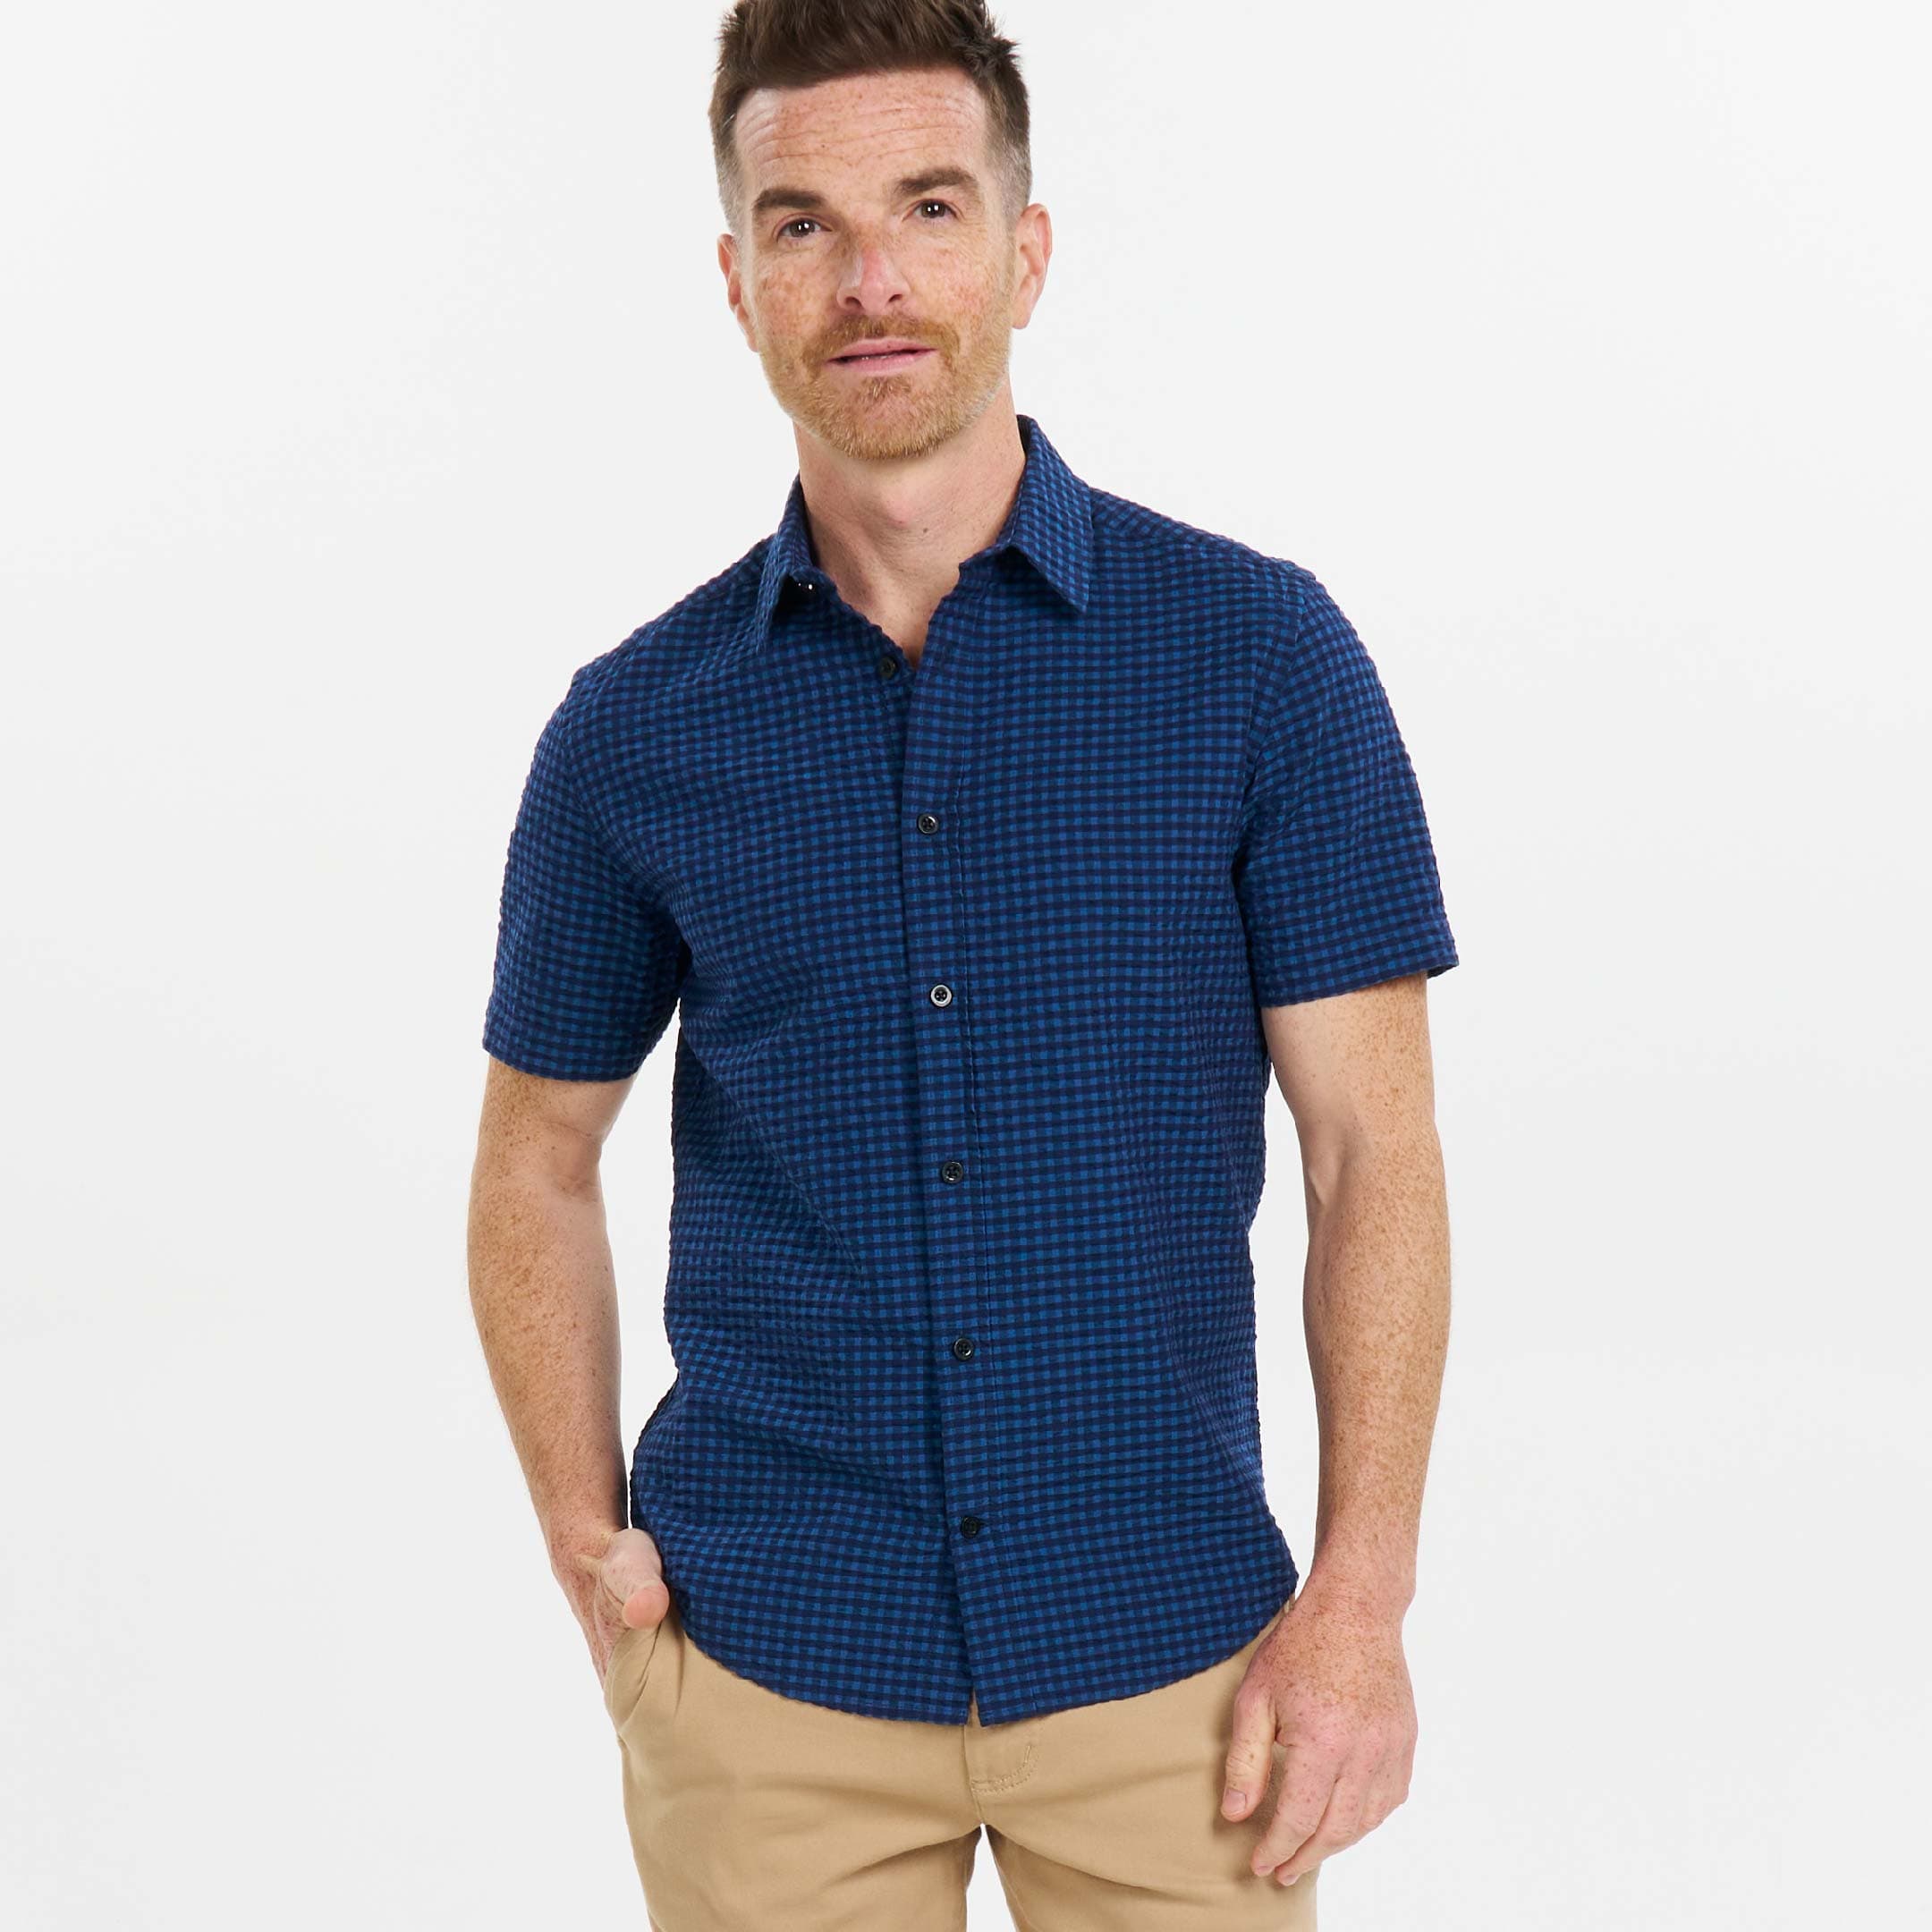 Ash & Erie Wharf Gingham Seersucker Short Sleeve Shirt for Short Men   Short Sleeve Everyday Shirts